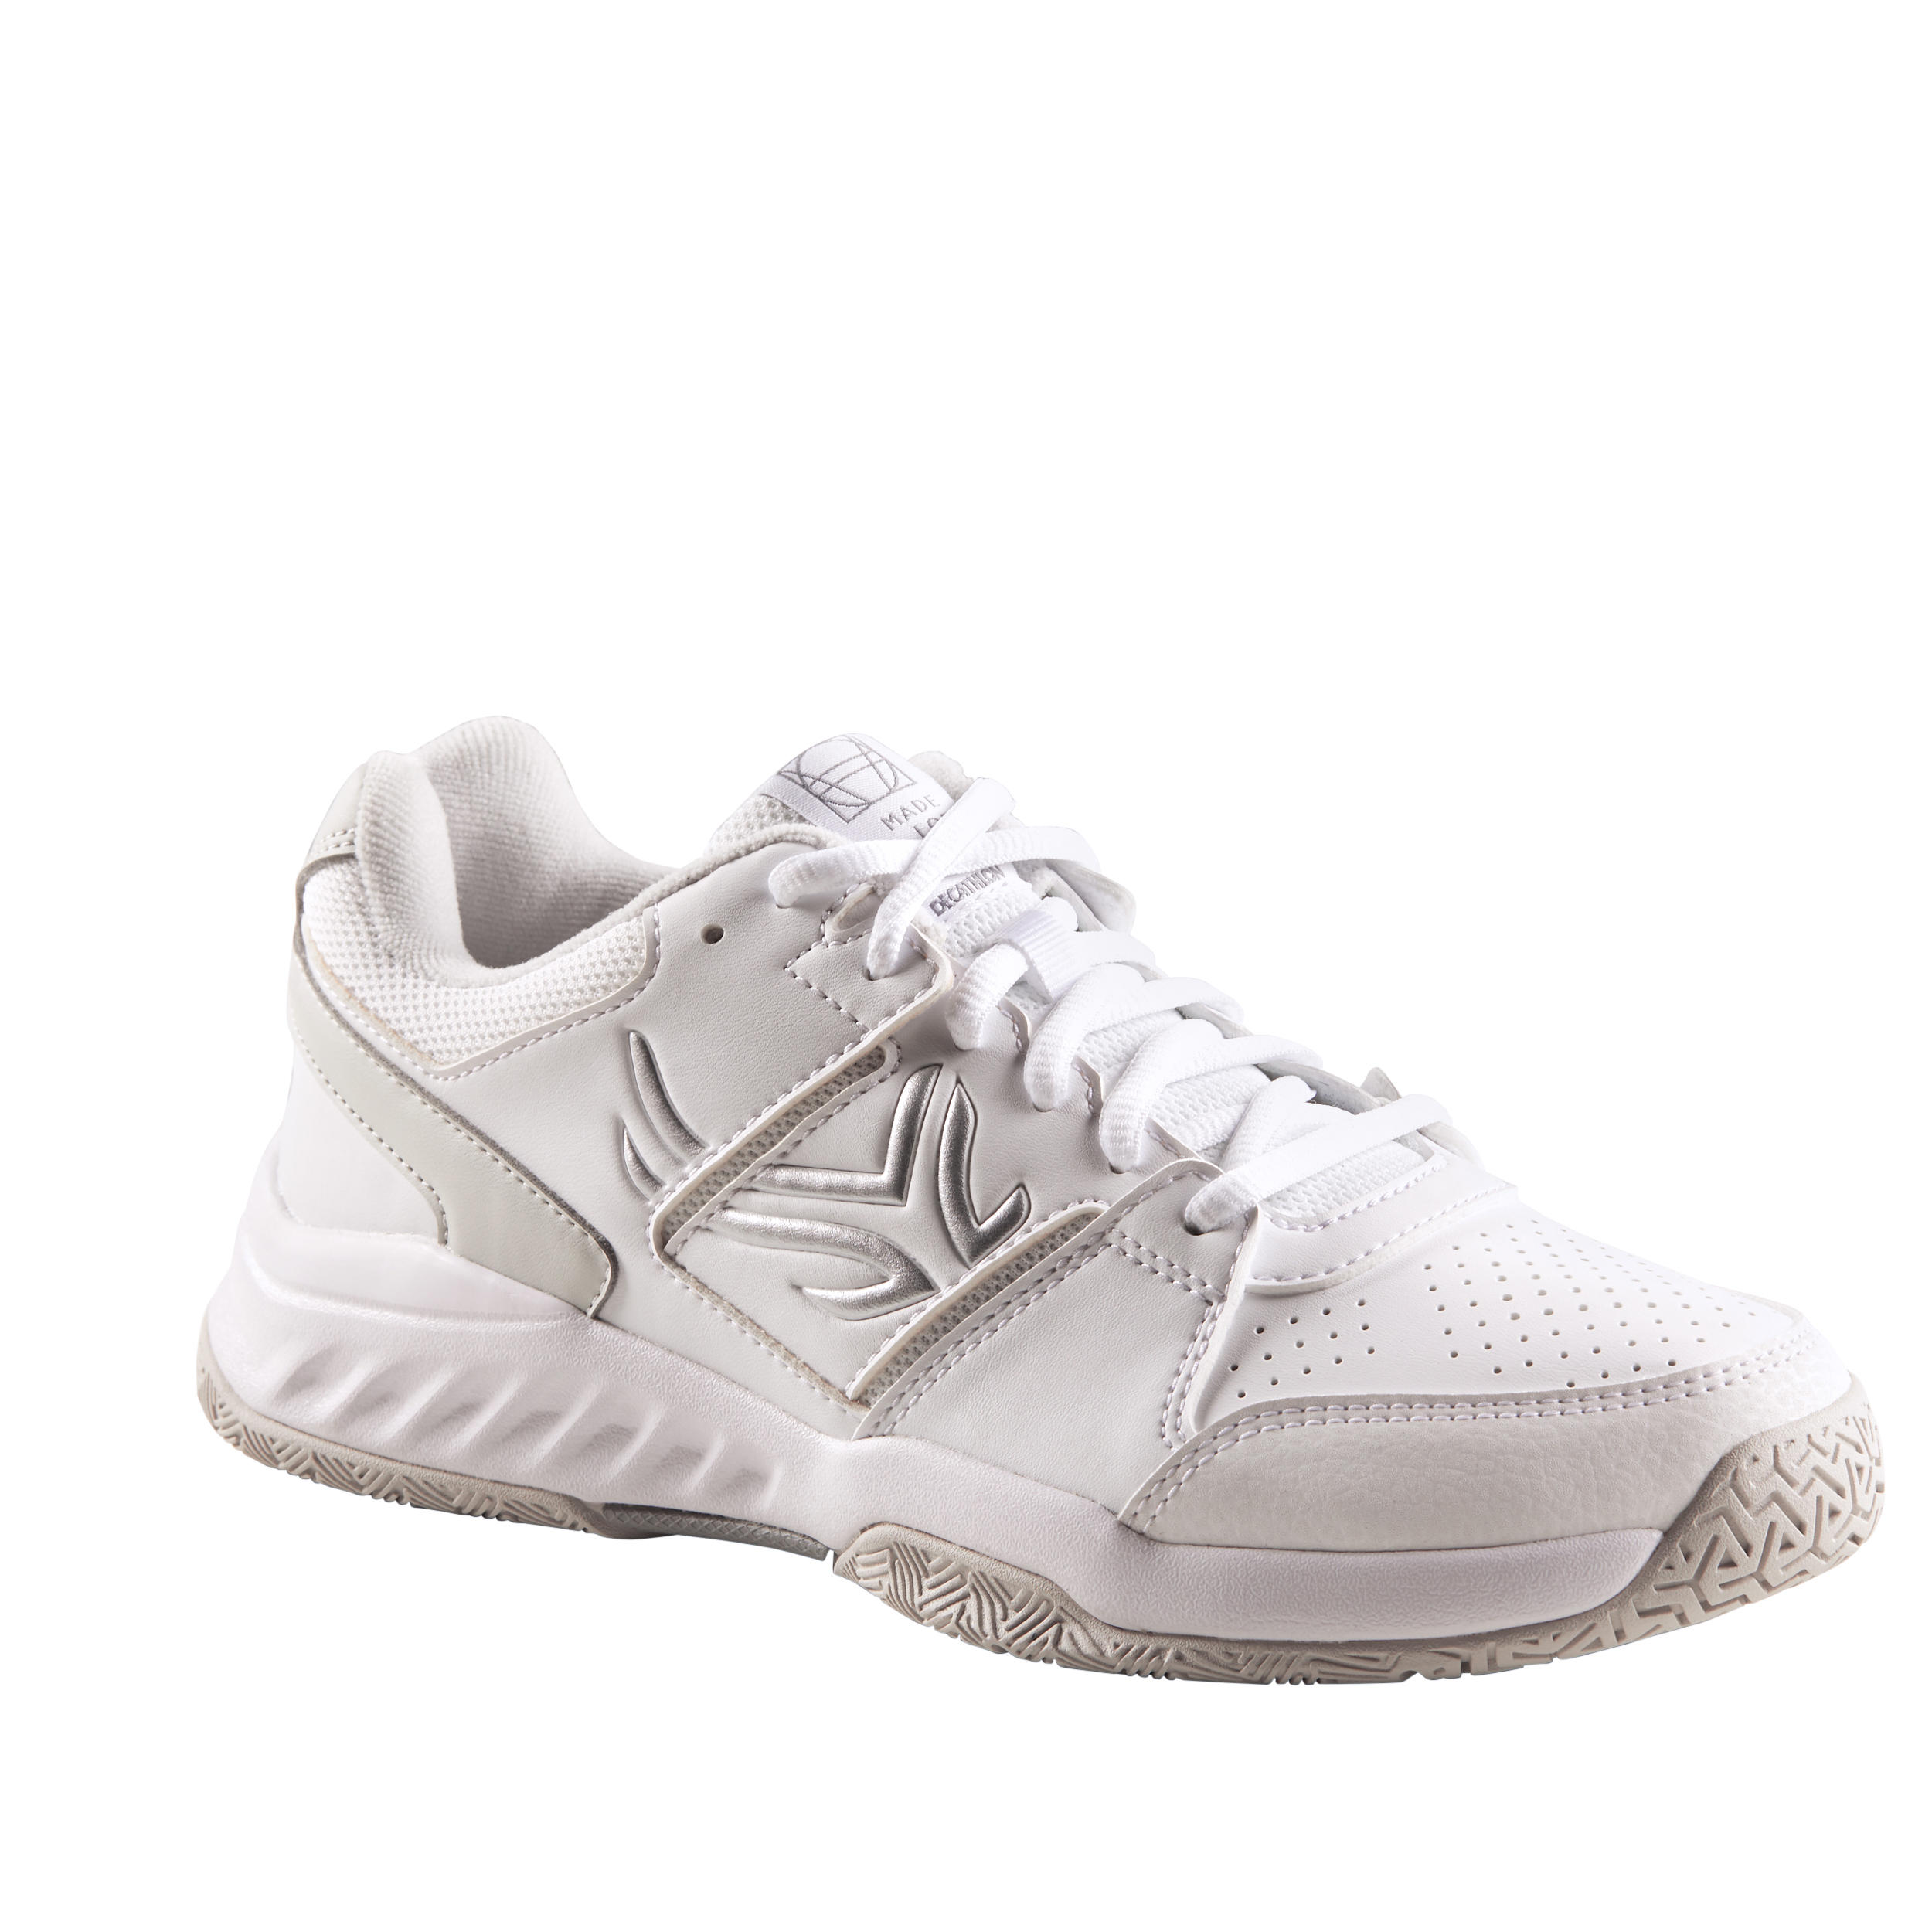 decathlon white shoes